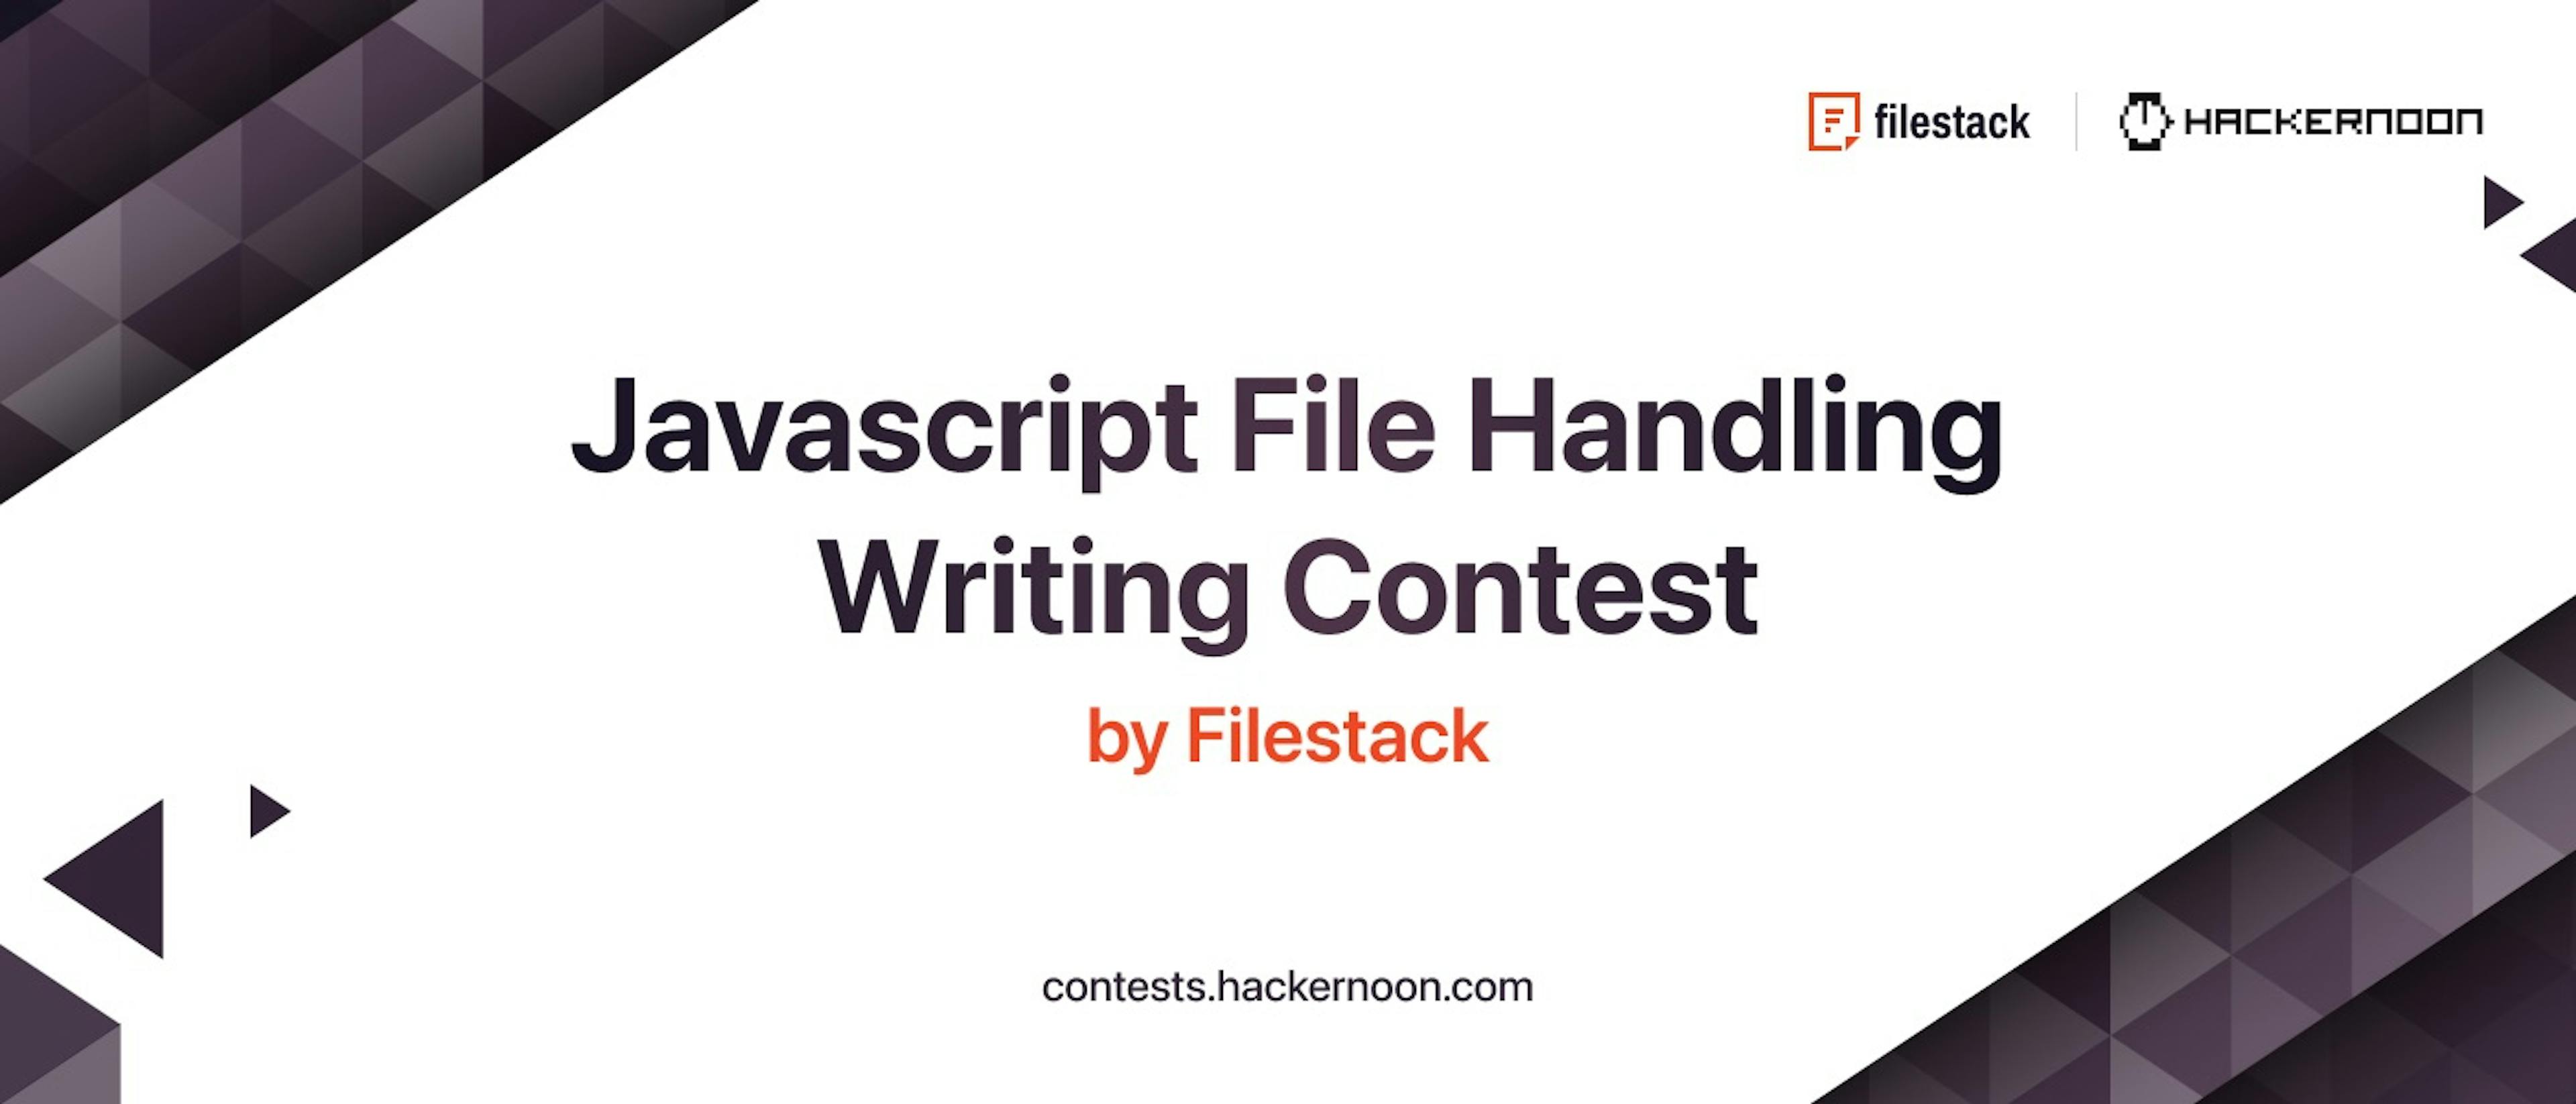 featured image - Cuộc thi viết xử lý tệp Javascript của Filestack & HackerNoon